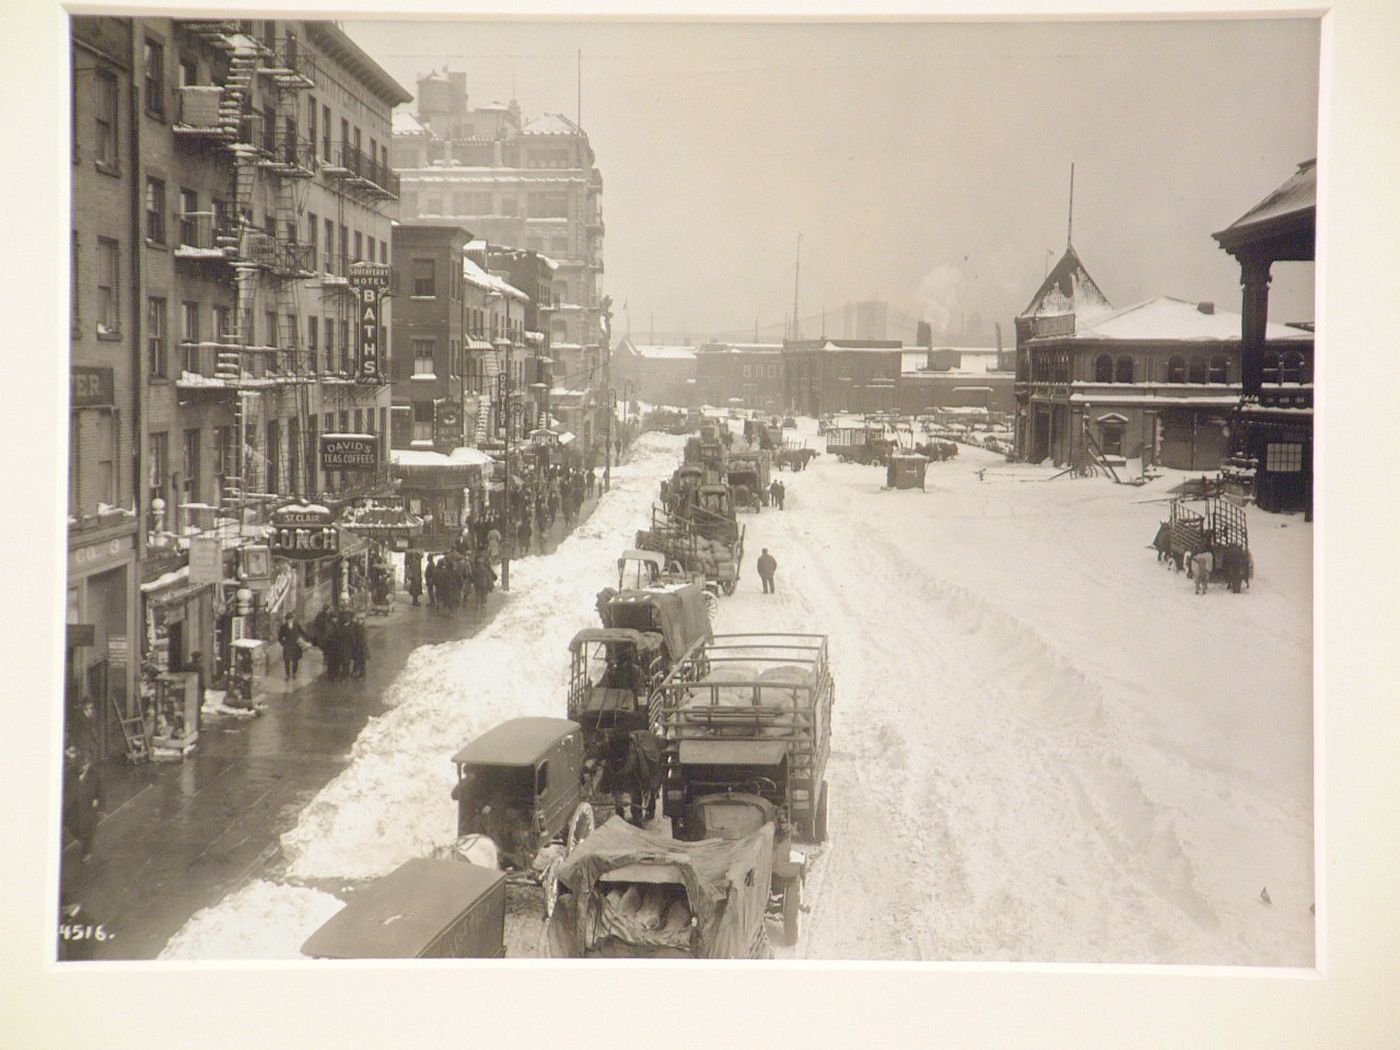 Winter scene along South Street, New York City, New York